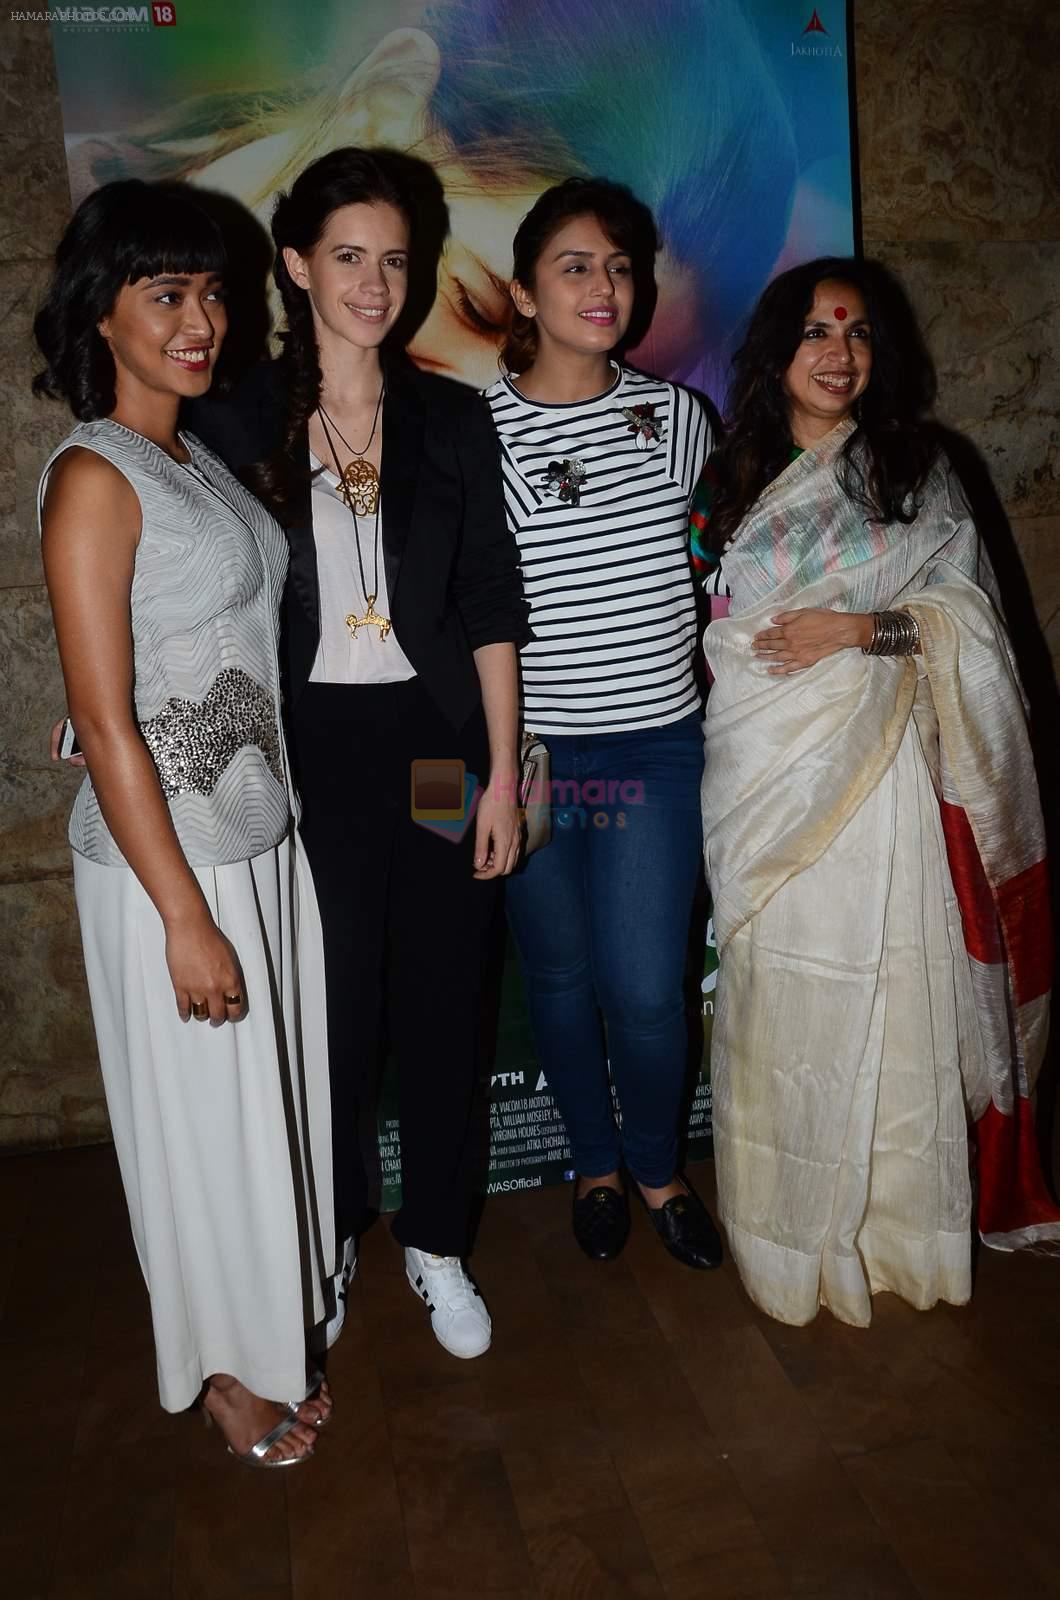 Sayani Gupta, Kalki Koechlin, Huma Qureshi, Shonali Bose at Margarita With A Straw screening in Mumbai on 16th April 2015